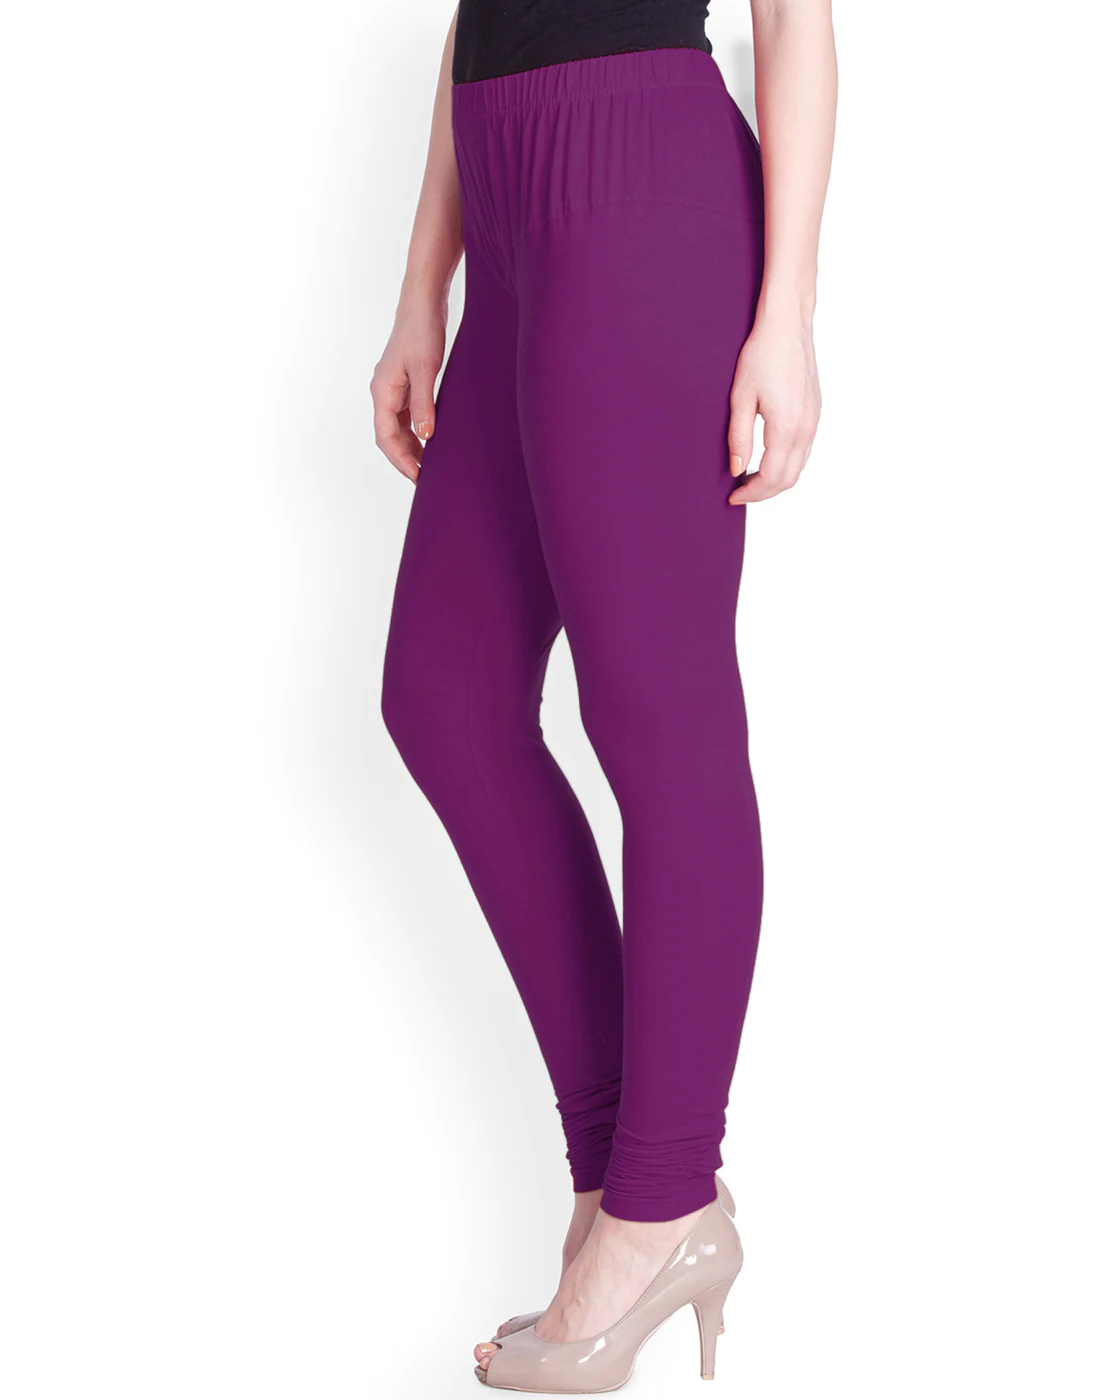 Buy Trasa Cotton Lycra Leggings for Women's and Girls Churidar Leggings,  Size :- Large, Light Purple - (Brand Outlet) at